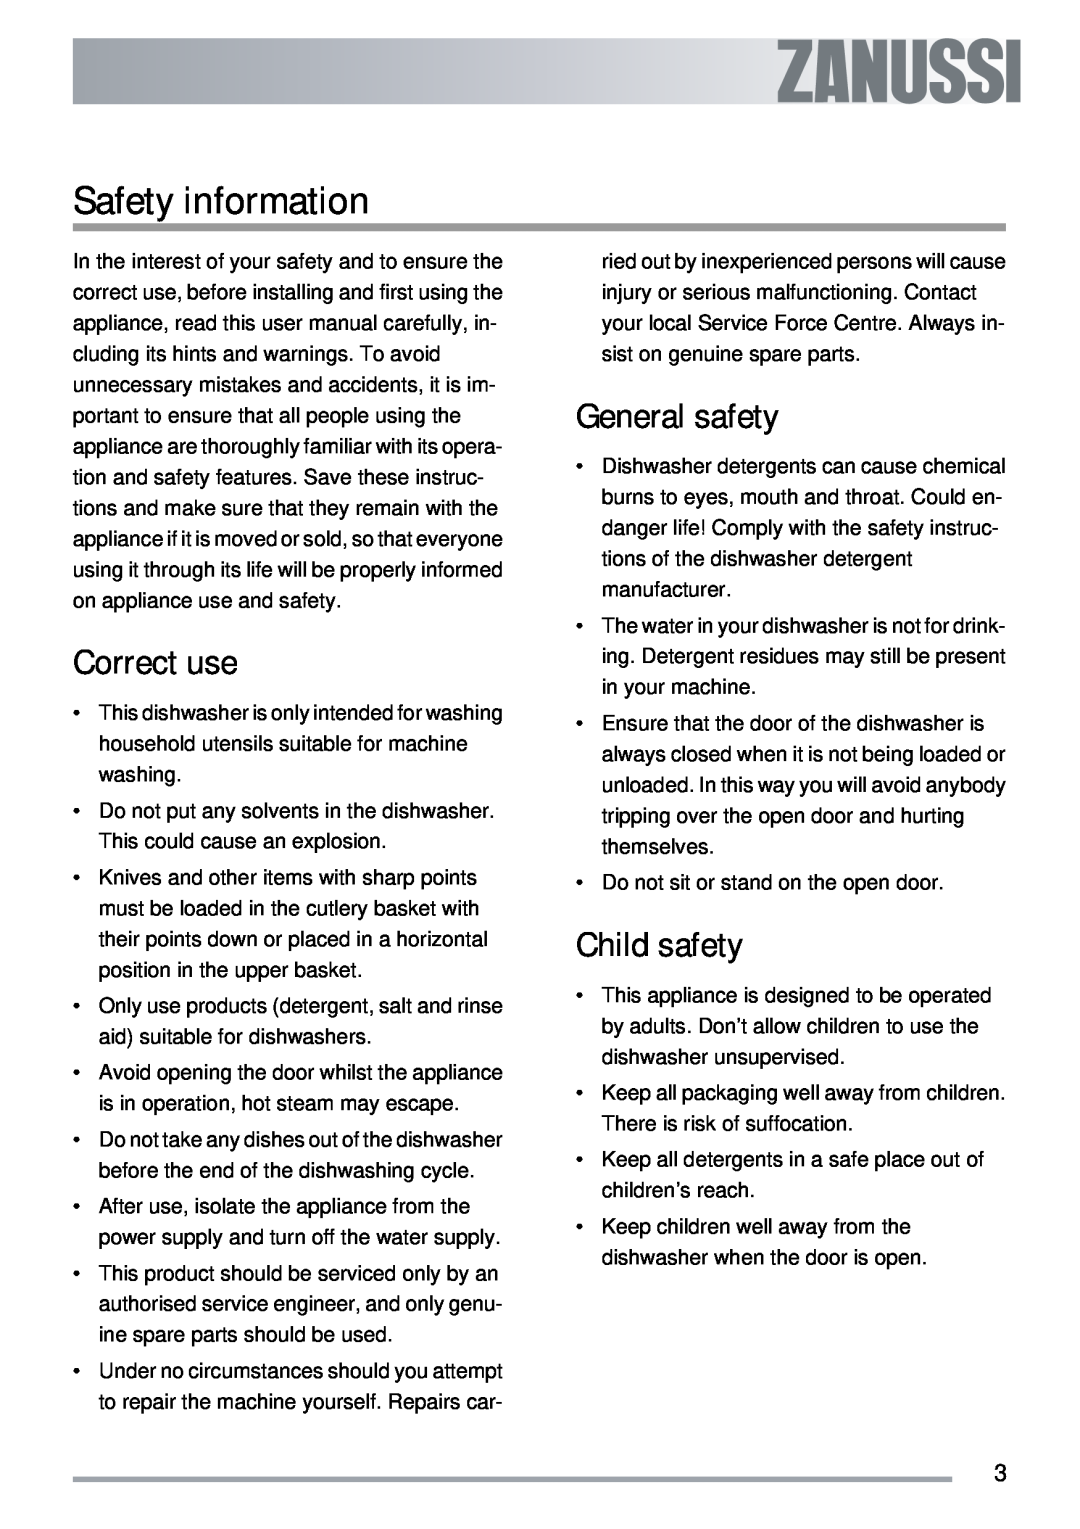 Zanussi ZDI 122 user manual Safety information, Correct use, General safety, Child safety 